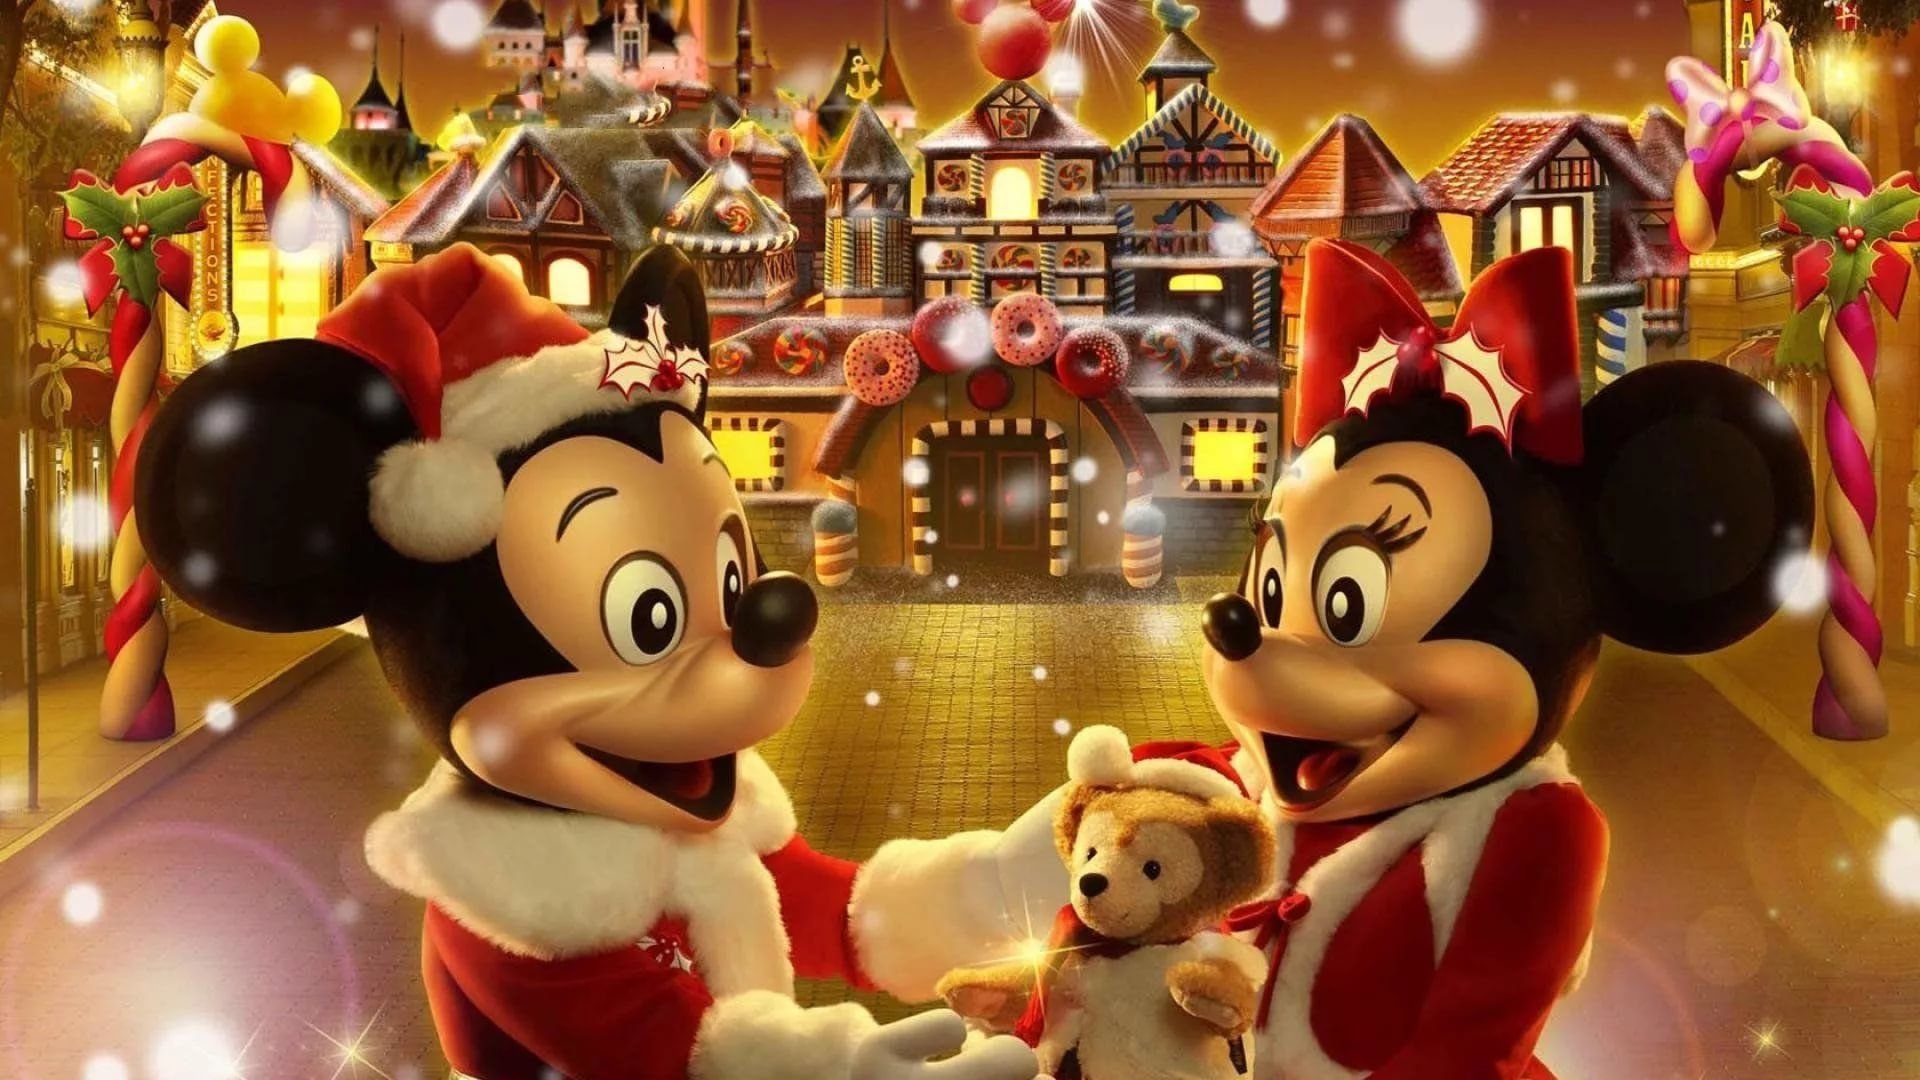 Disney Christmas wallpaper and themes